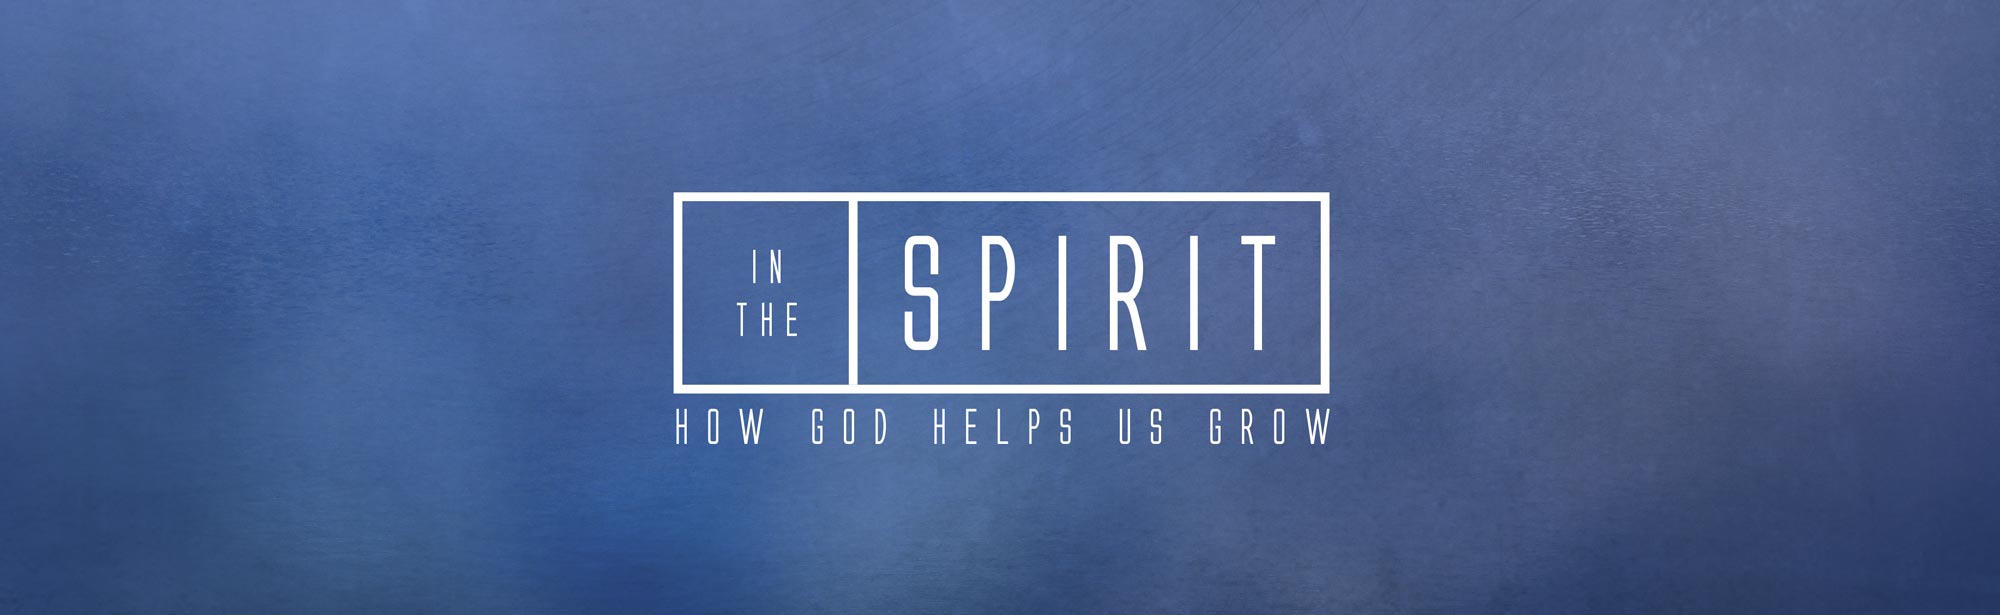 In the Spirit Series Header - Sermon Series - Grace Community Church